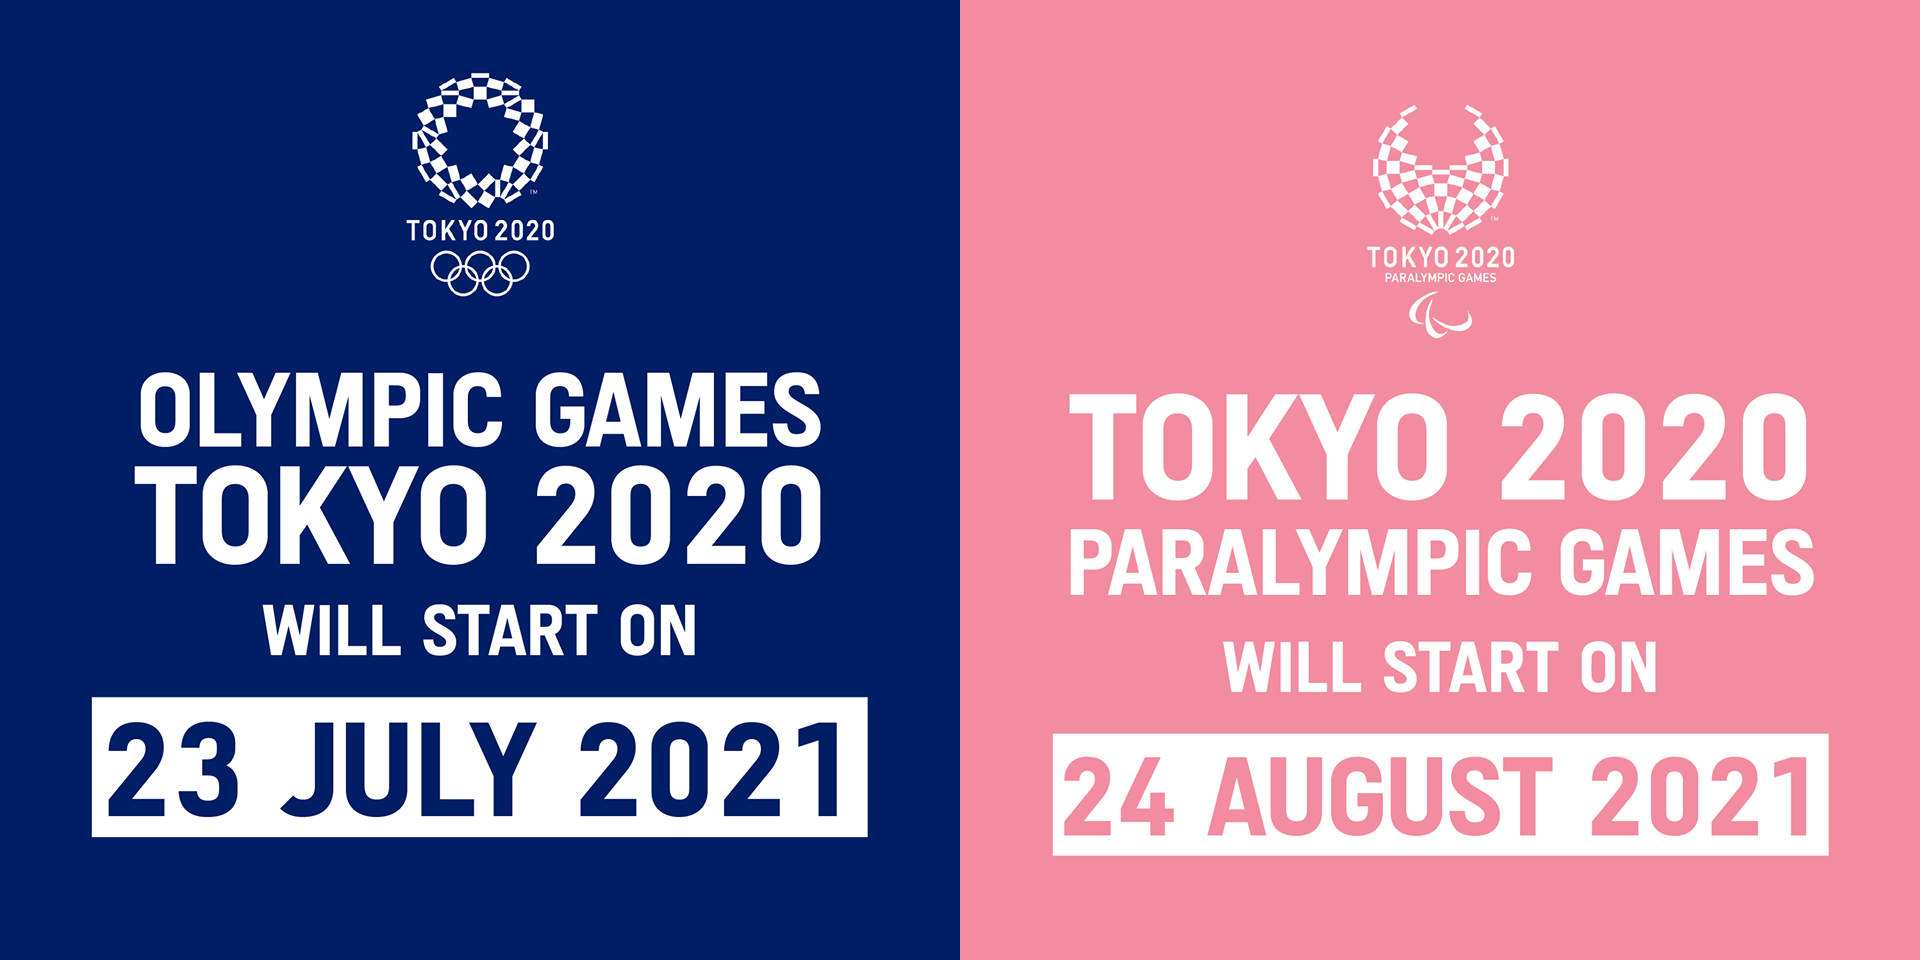 Olympic badminton schedule 2021